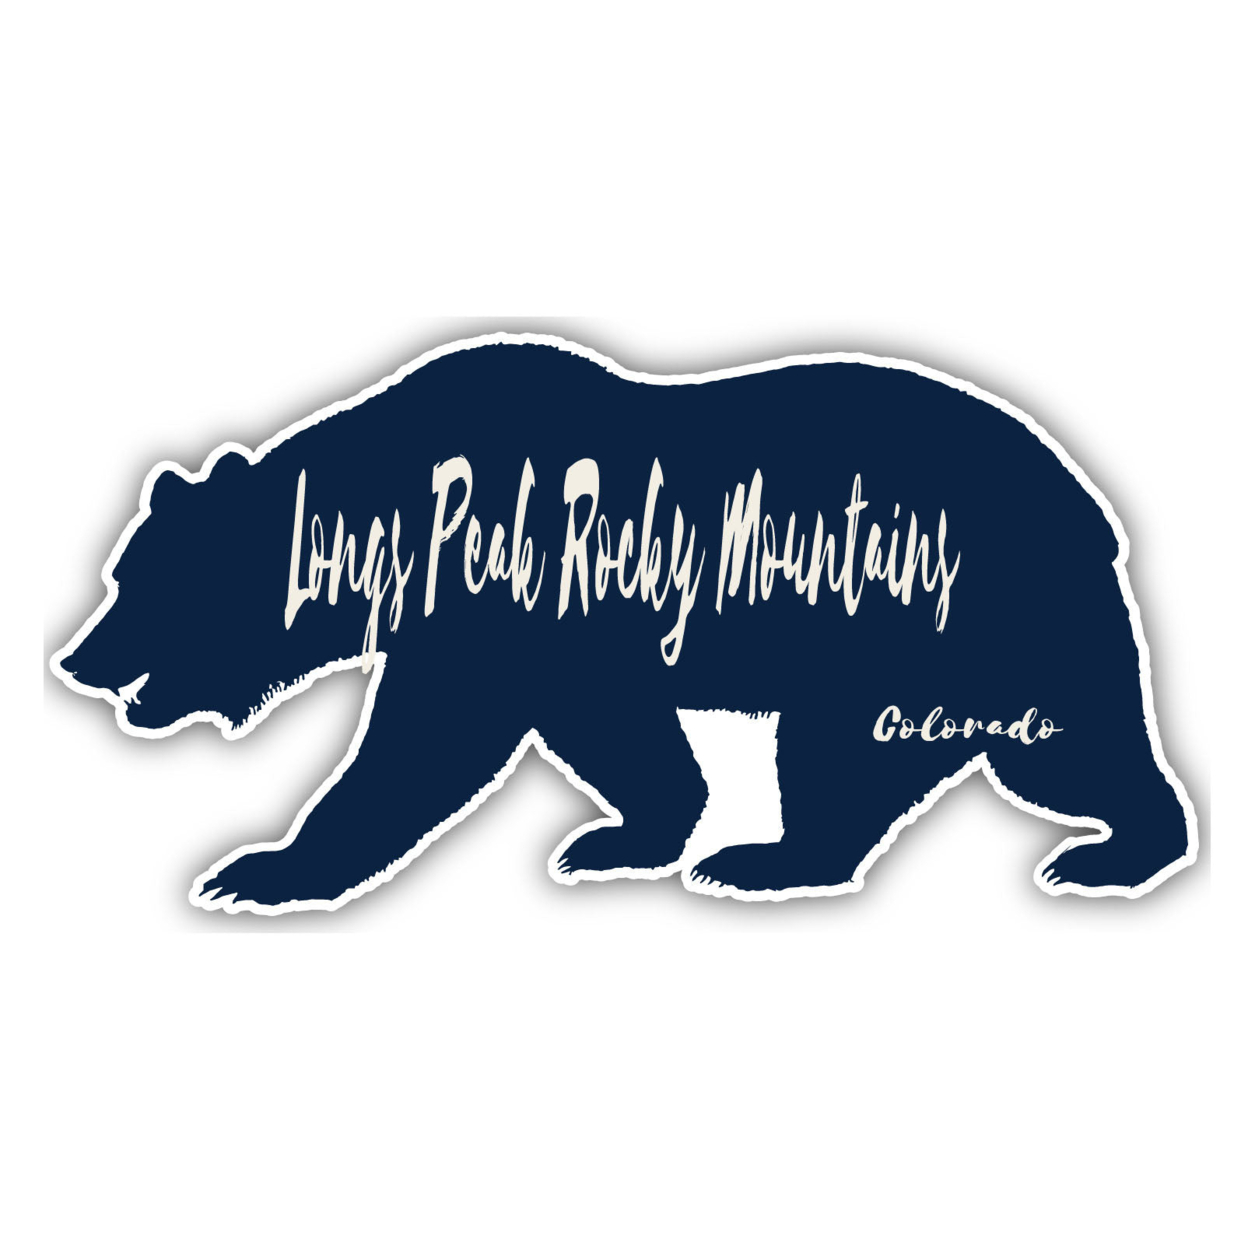 Longs Peak Rocky Mountains Colorado Souvenir Decorative Stickers (Choose Theme And Size) - 2-Inch, Bear